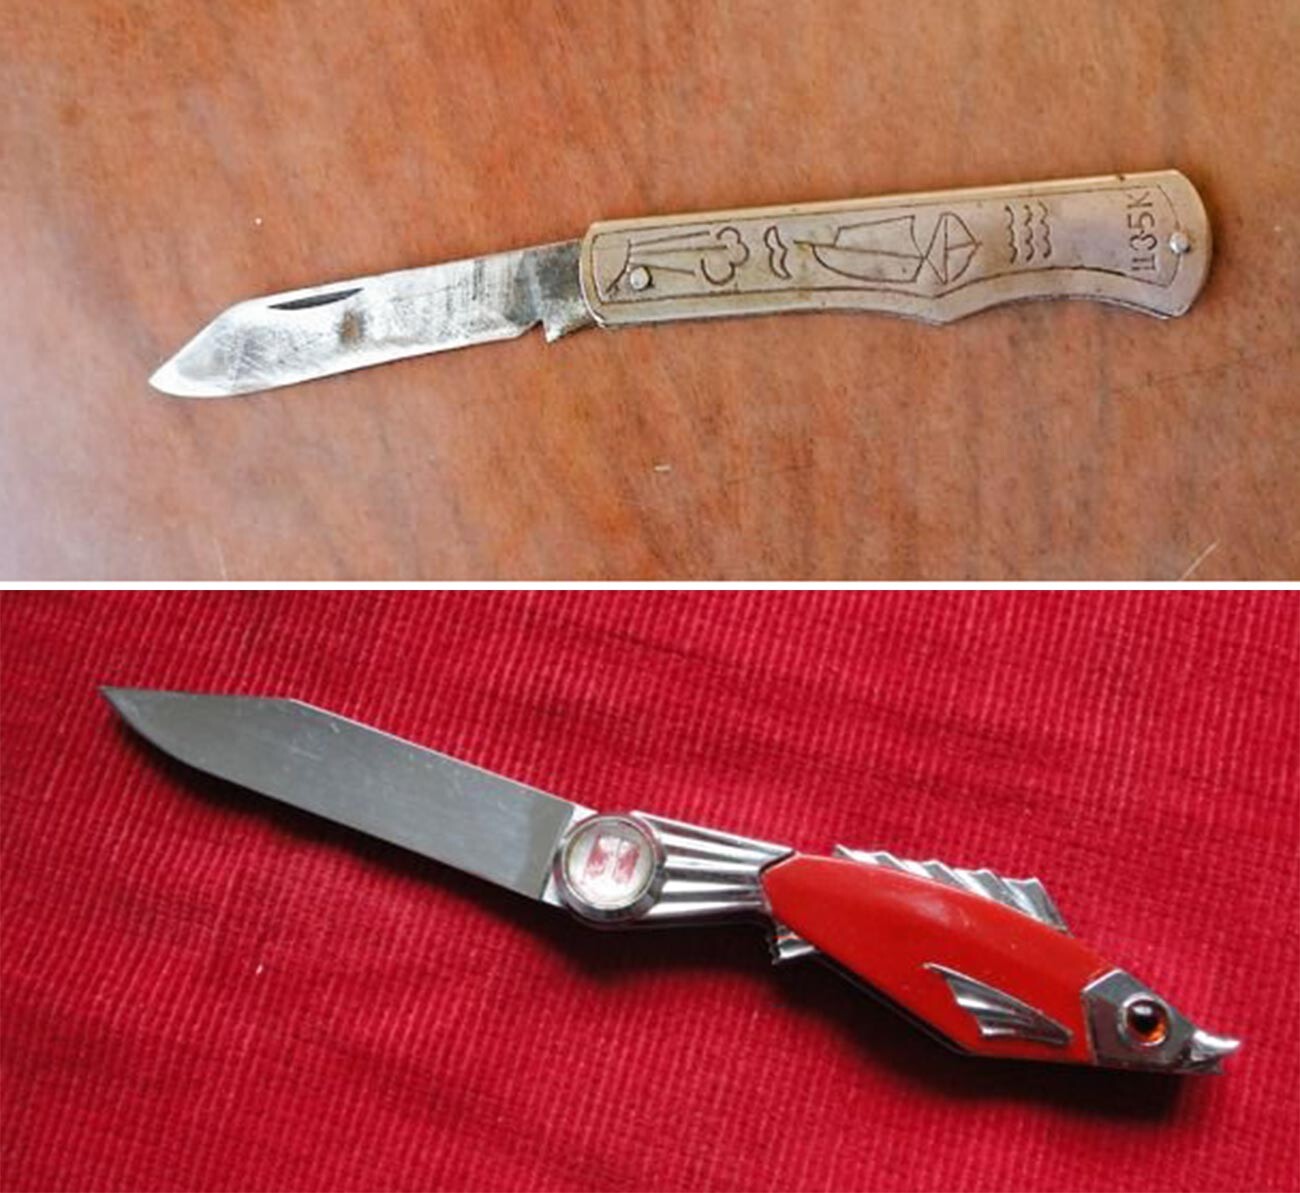 'Shkolnik' (upper) and 'Fish' (lower) pocket knives.